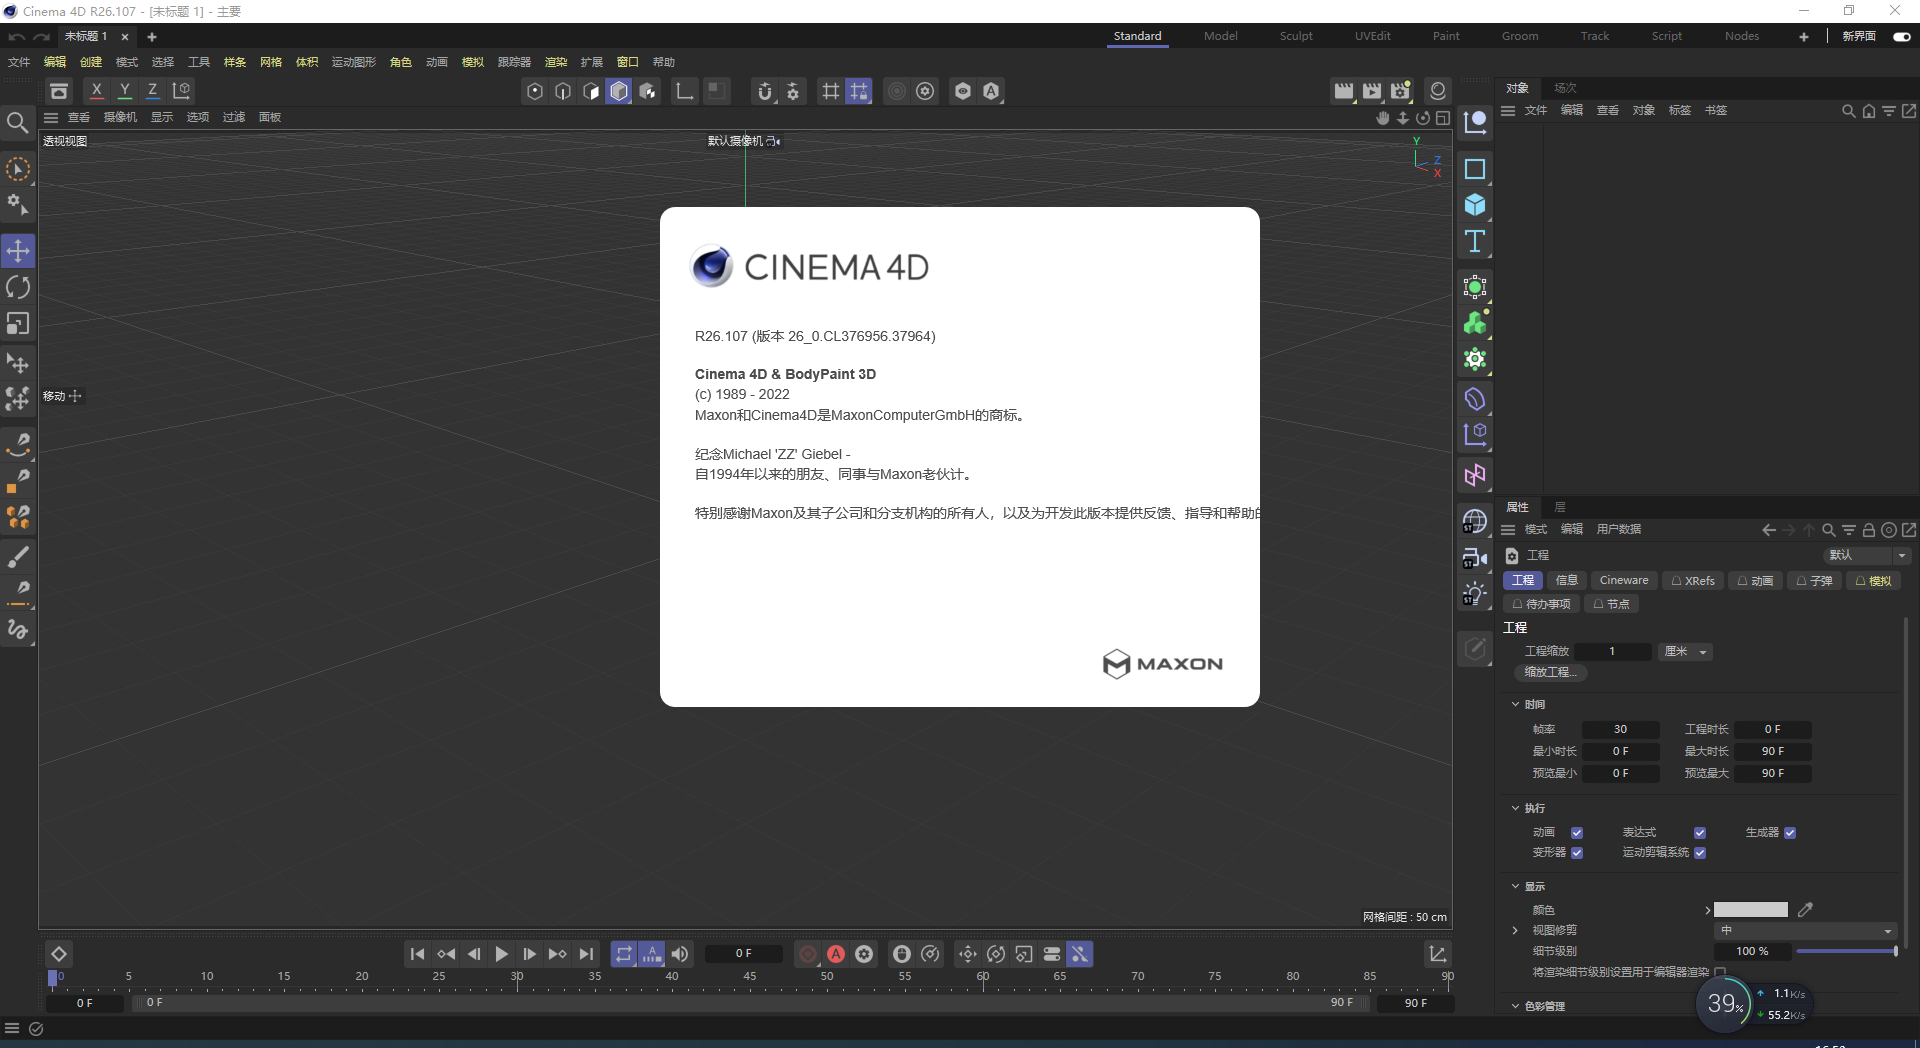 CINEMA 4D Studio R26.107 / 2024.0.2 instal